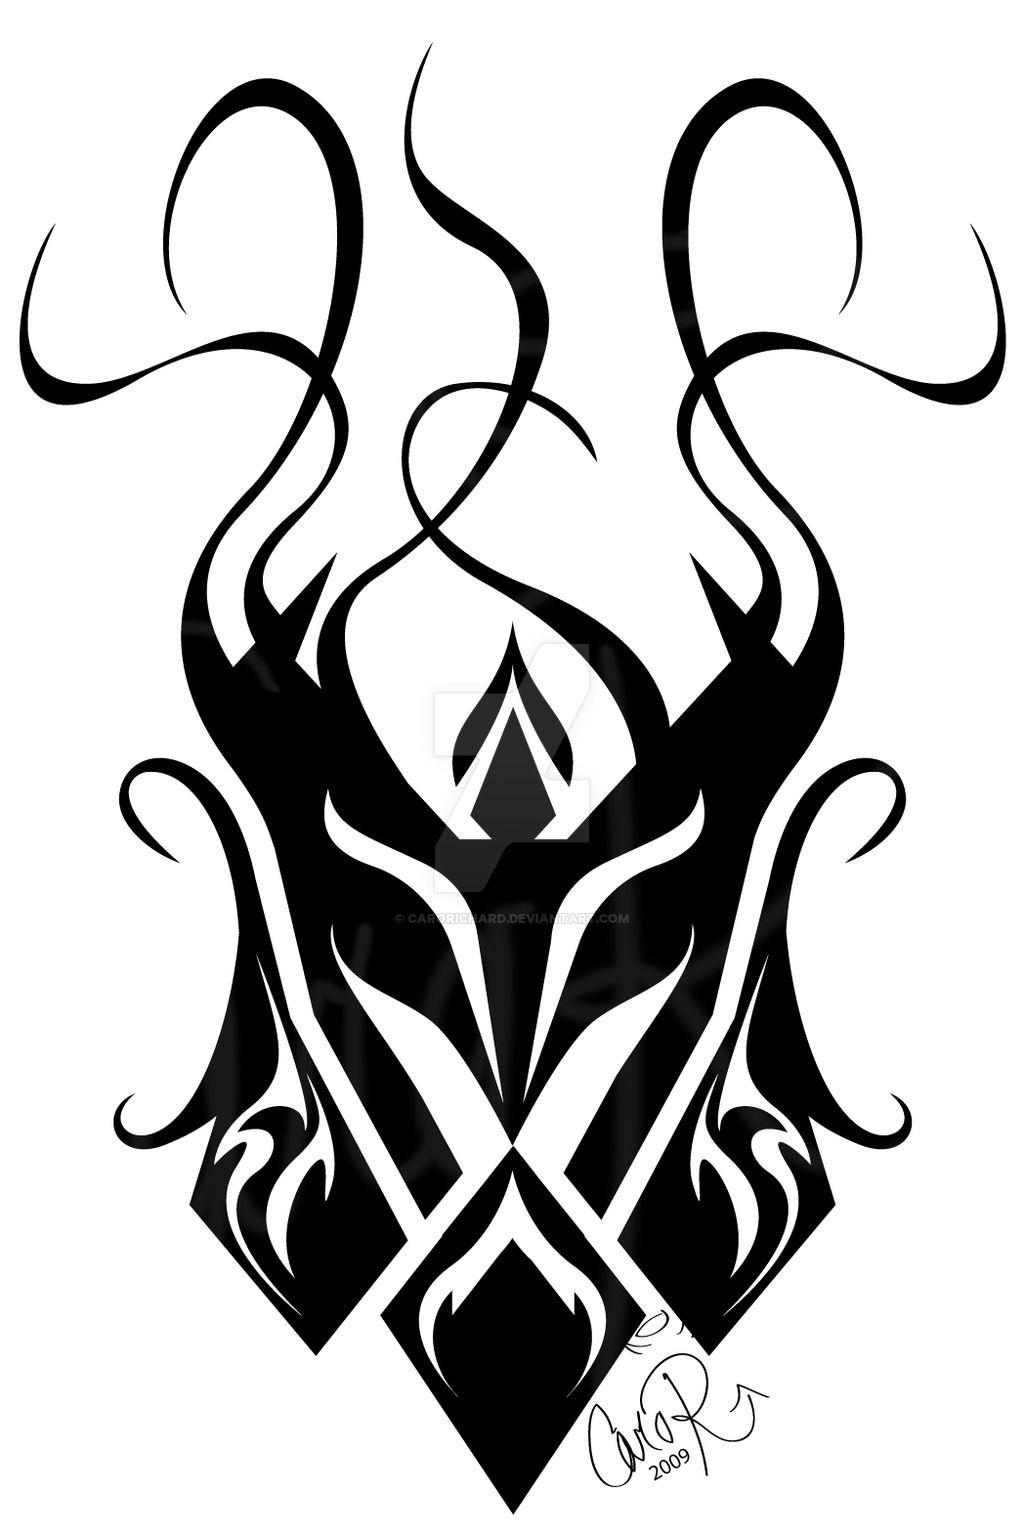 Black and White Transformers Logo - Another transformer logo by CaroRichard on DeviantArt